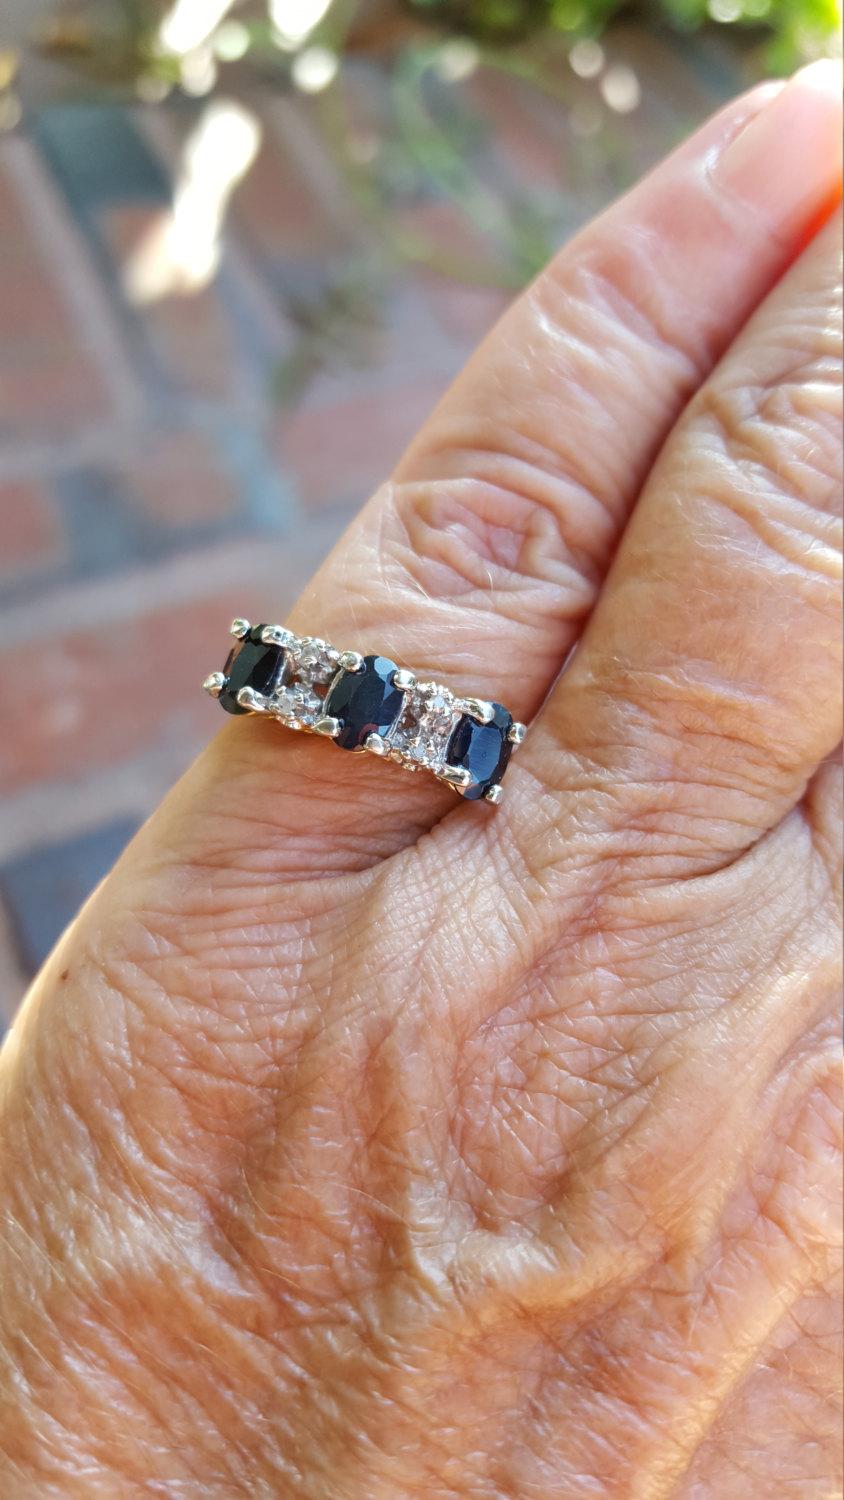 Hochzeit - sapphire diamond wedding band ring size 6 1970's 1.5ct genuine natural blue sapphire genuine natural diamonds gold vermeil sterling ring